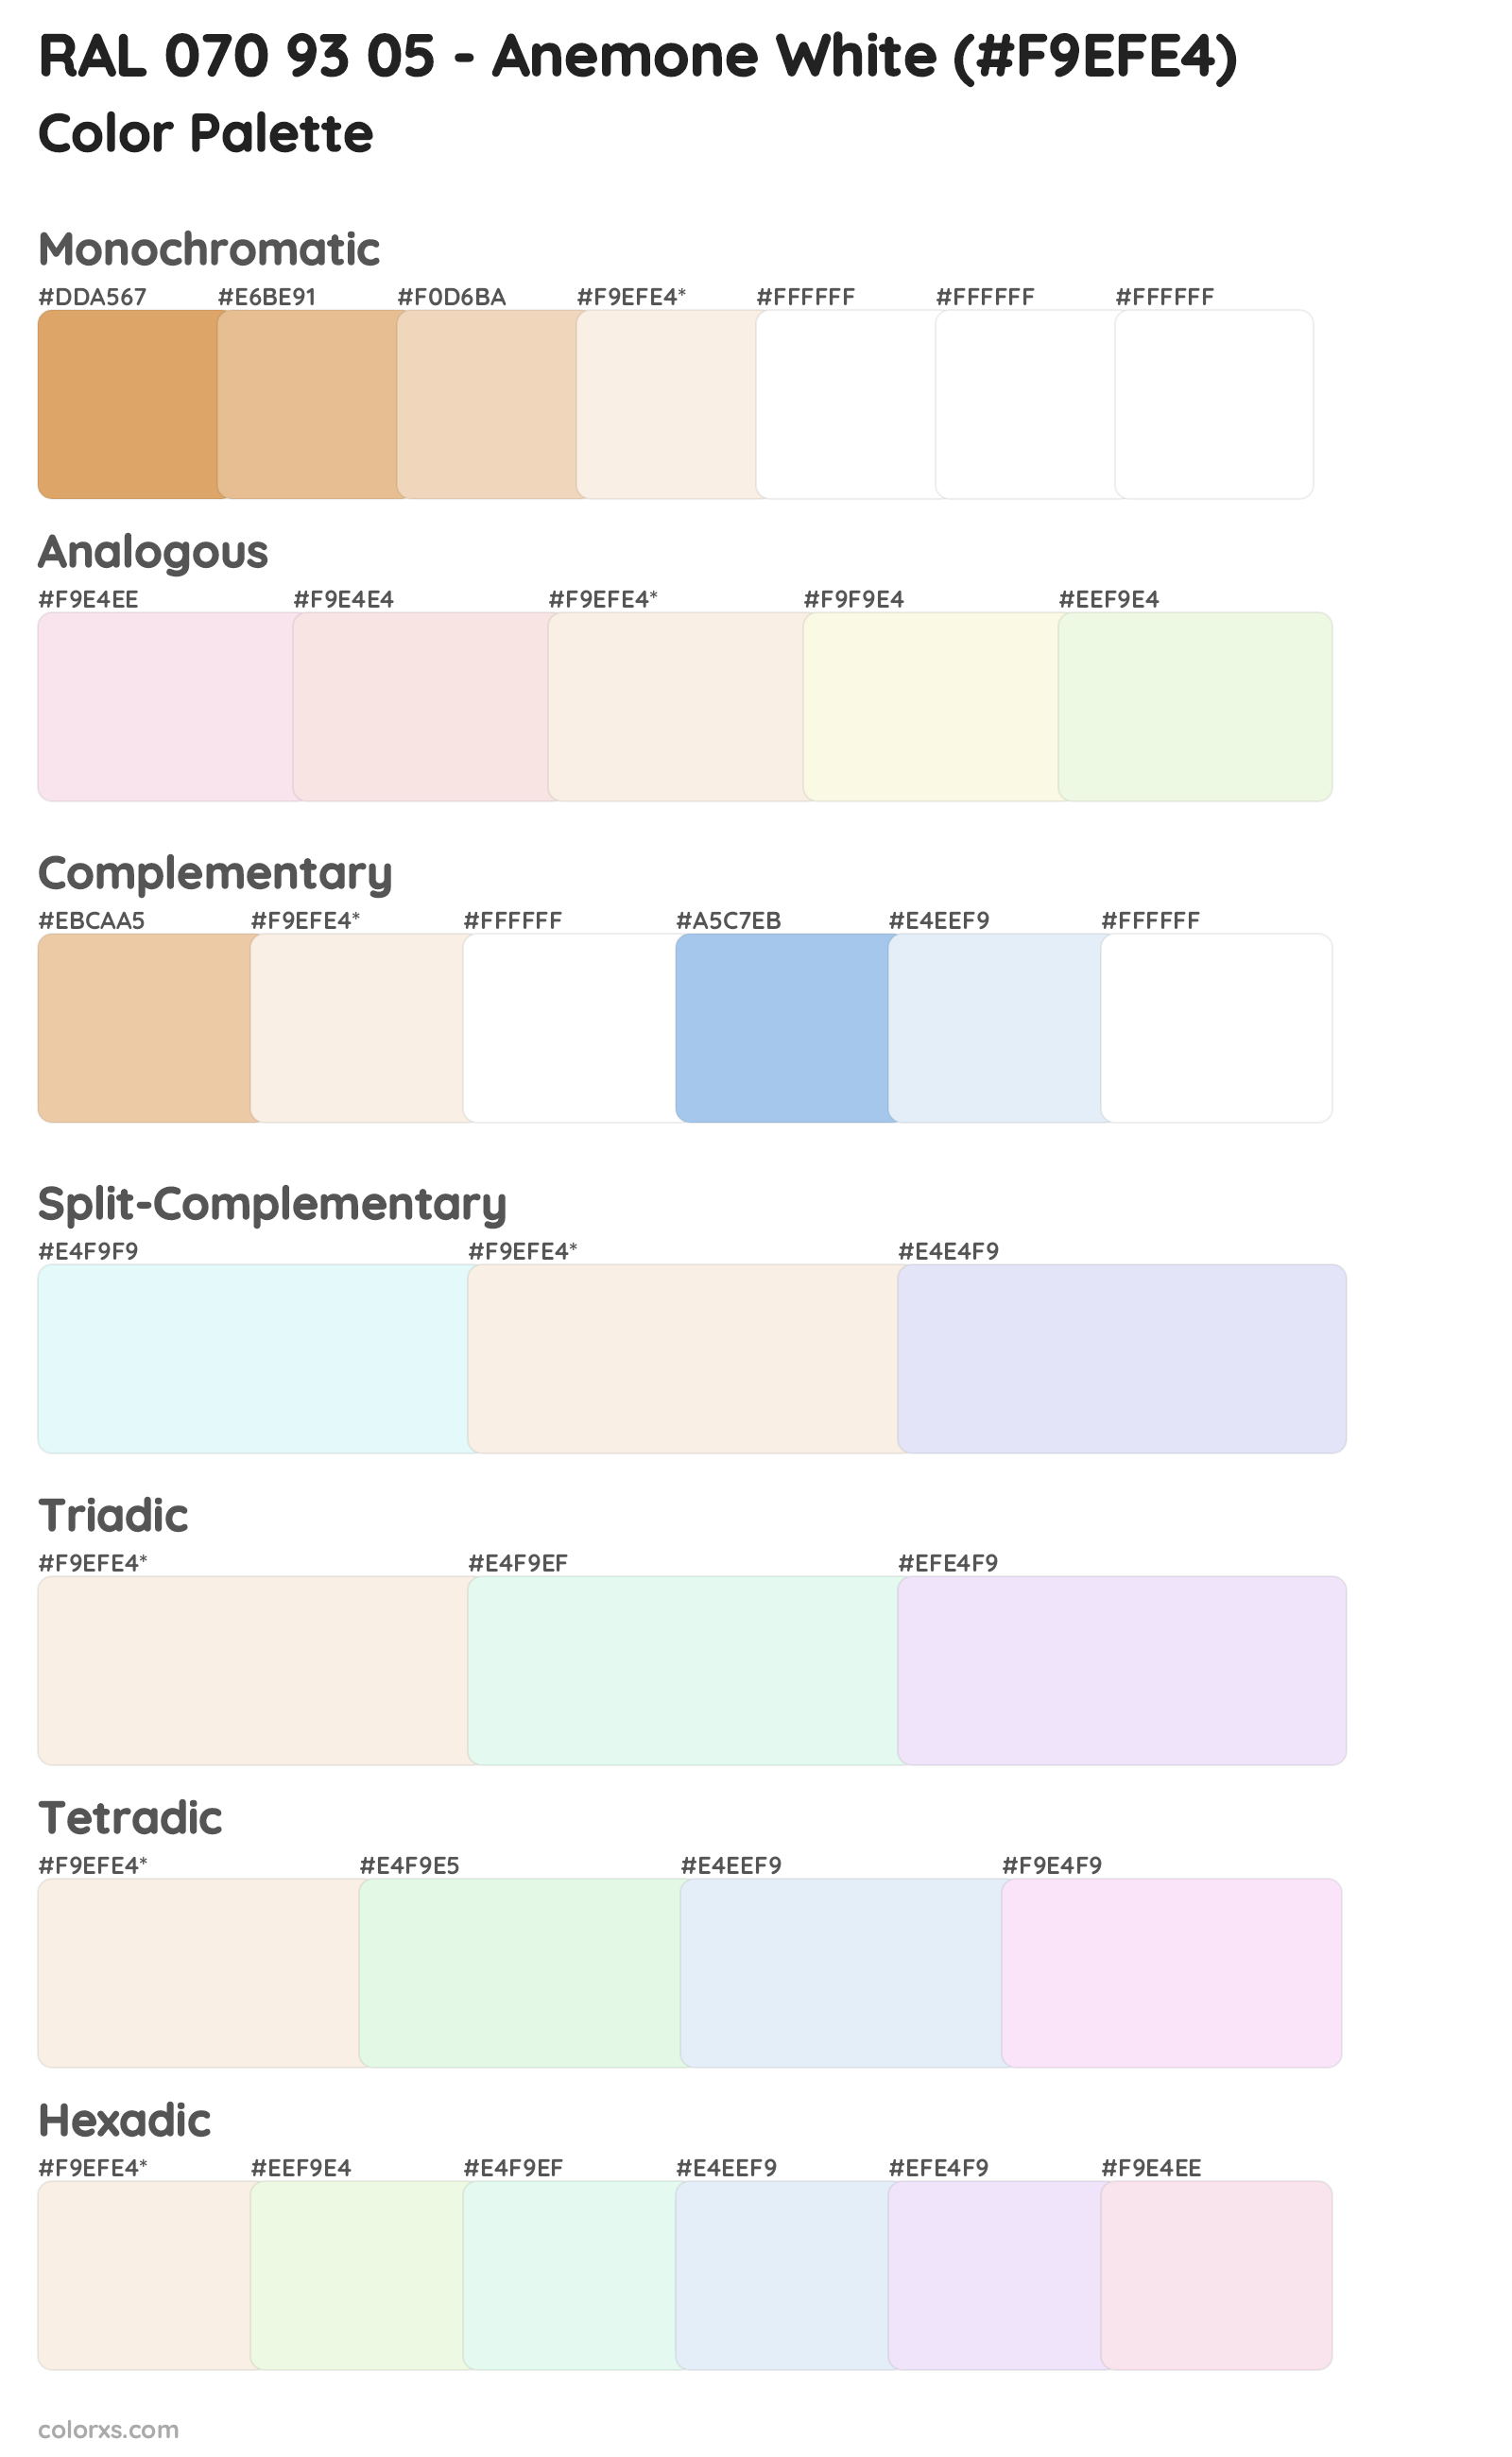 RAL 070 93 05 - Anemone White Color Scheme Palettes